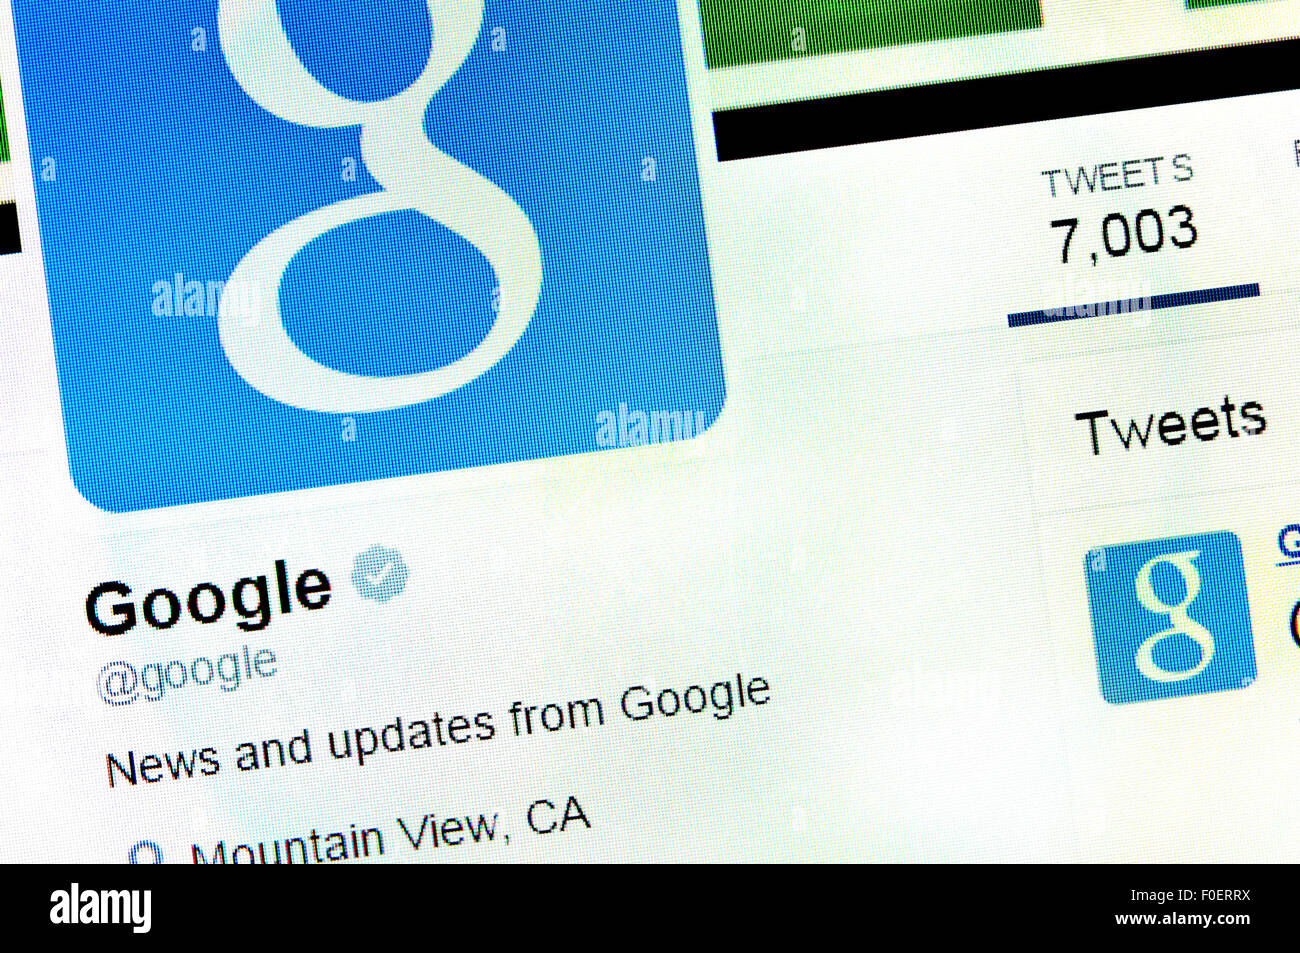 Computer screenshot - Google Twitter account Stock Photo